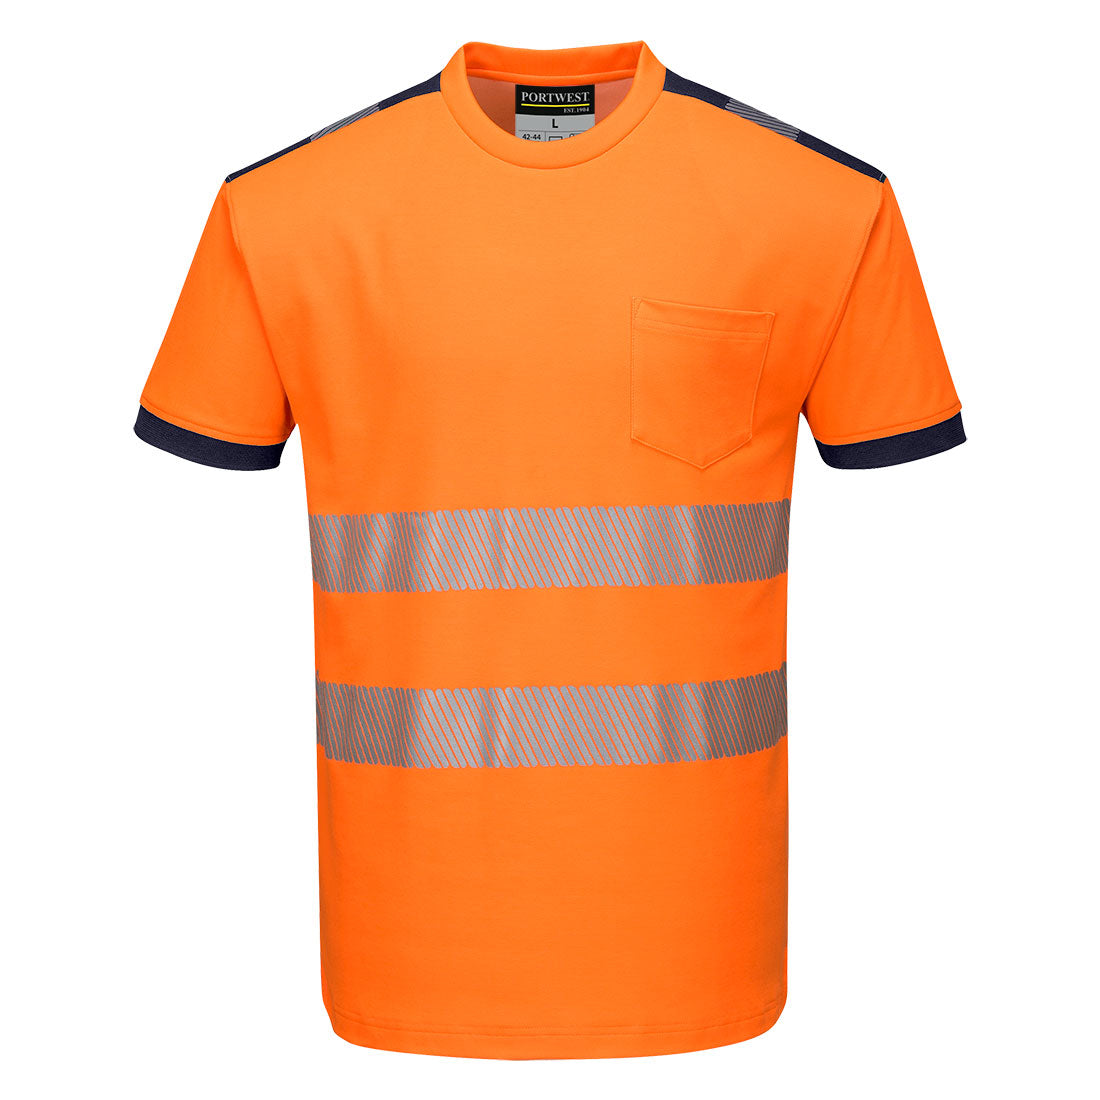 Portwest T181 - Orange/Navy Sz 4XL PW3 Hi-Vis Short Sleeved T-Shirt Viz Visibilty